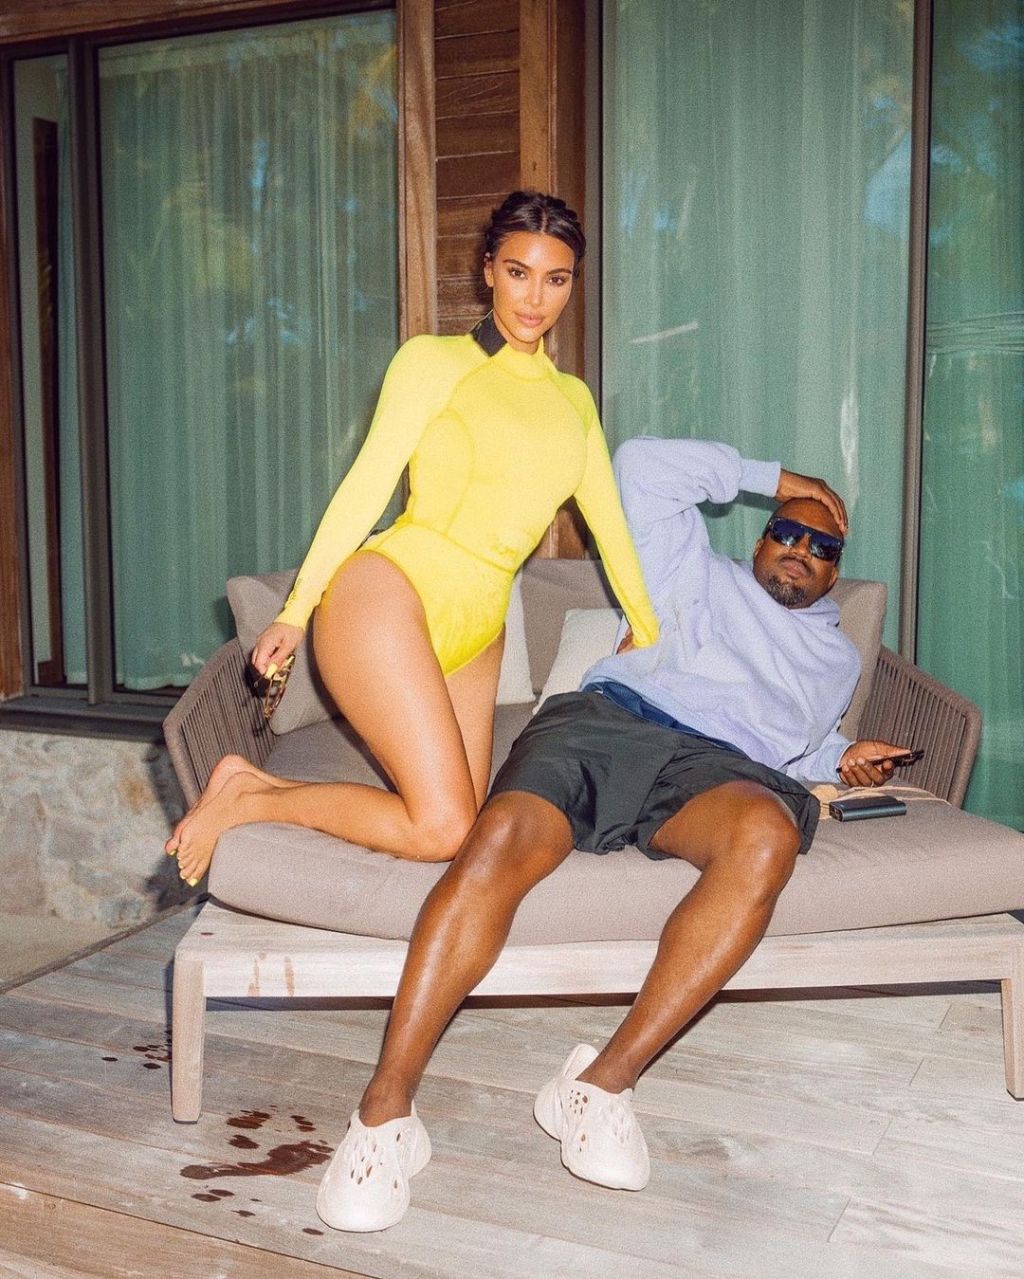 Kanye West and Kim Kardashian finalize divorce